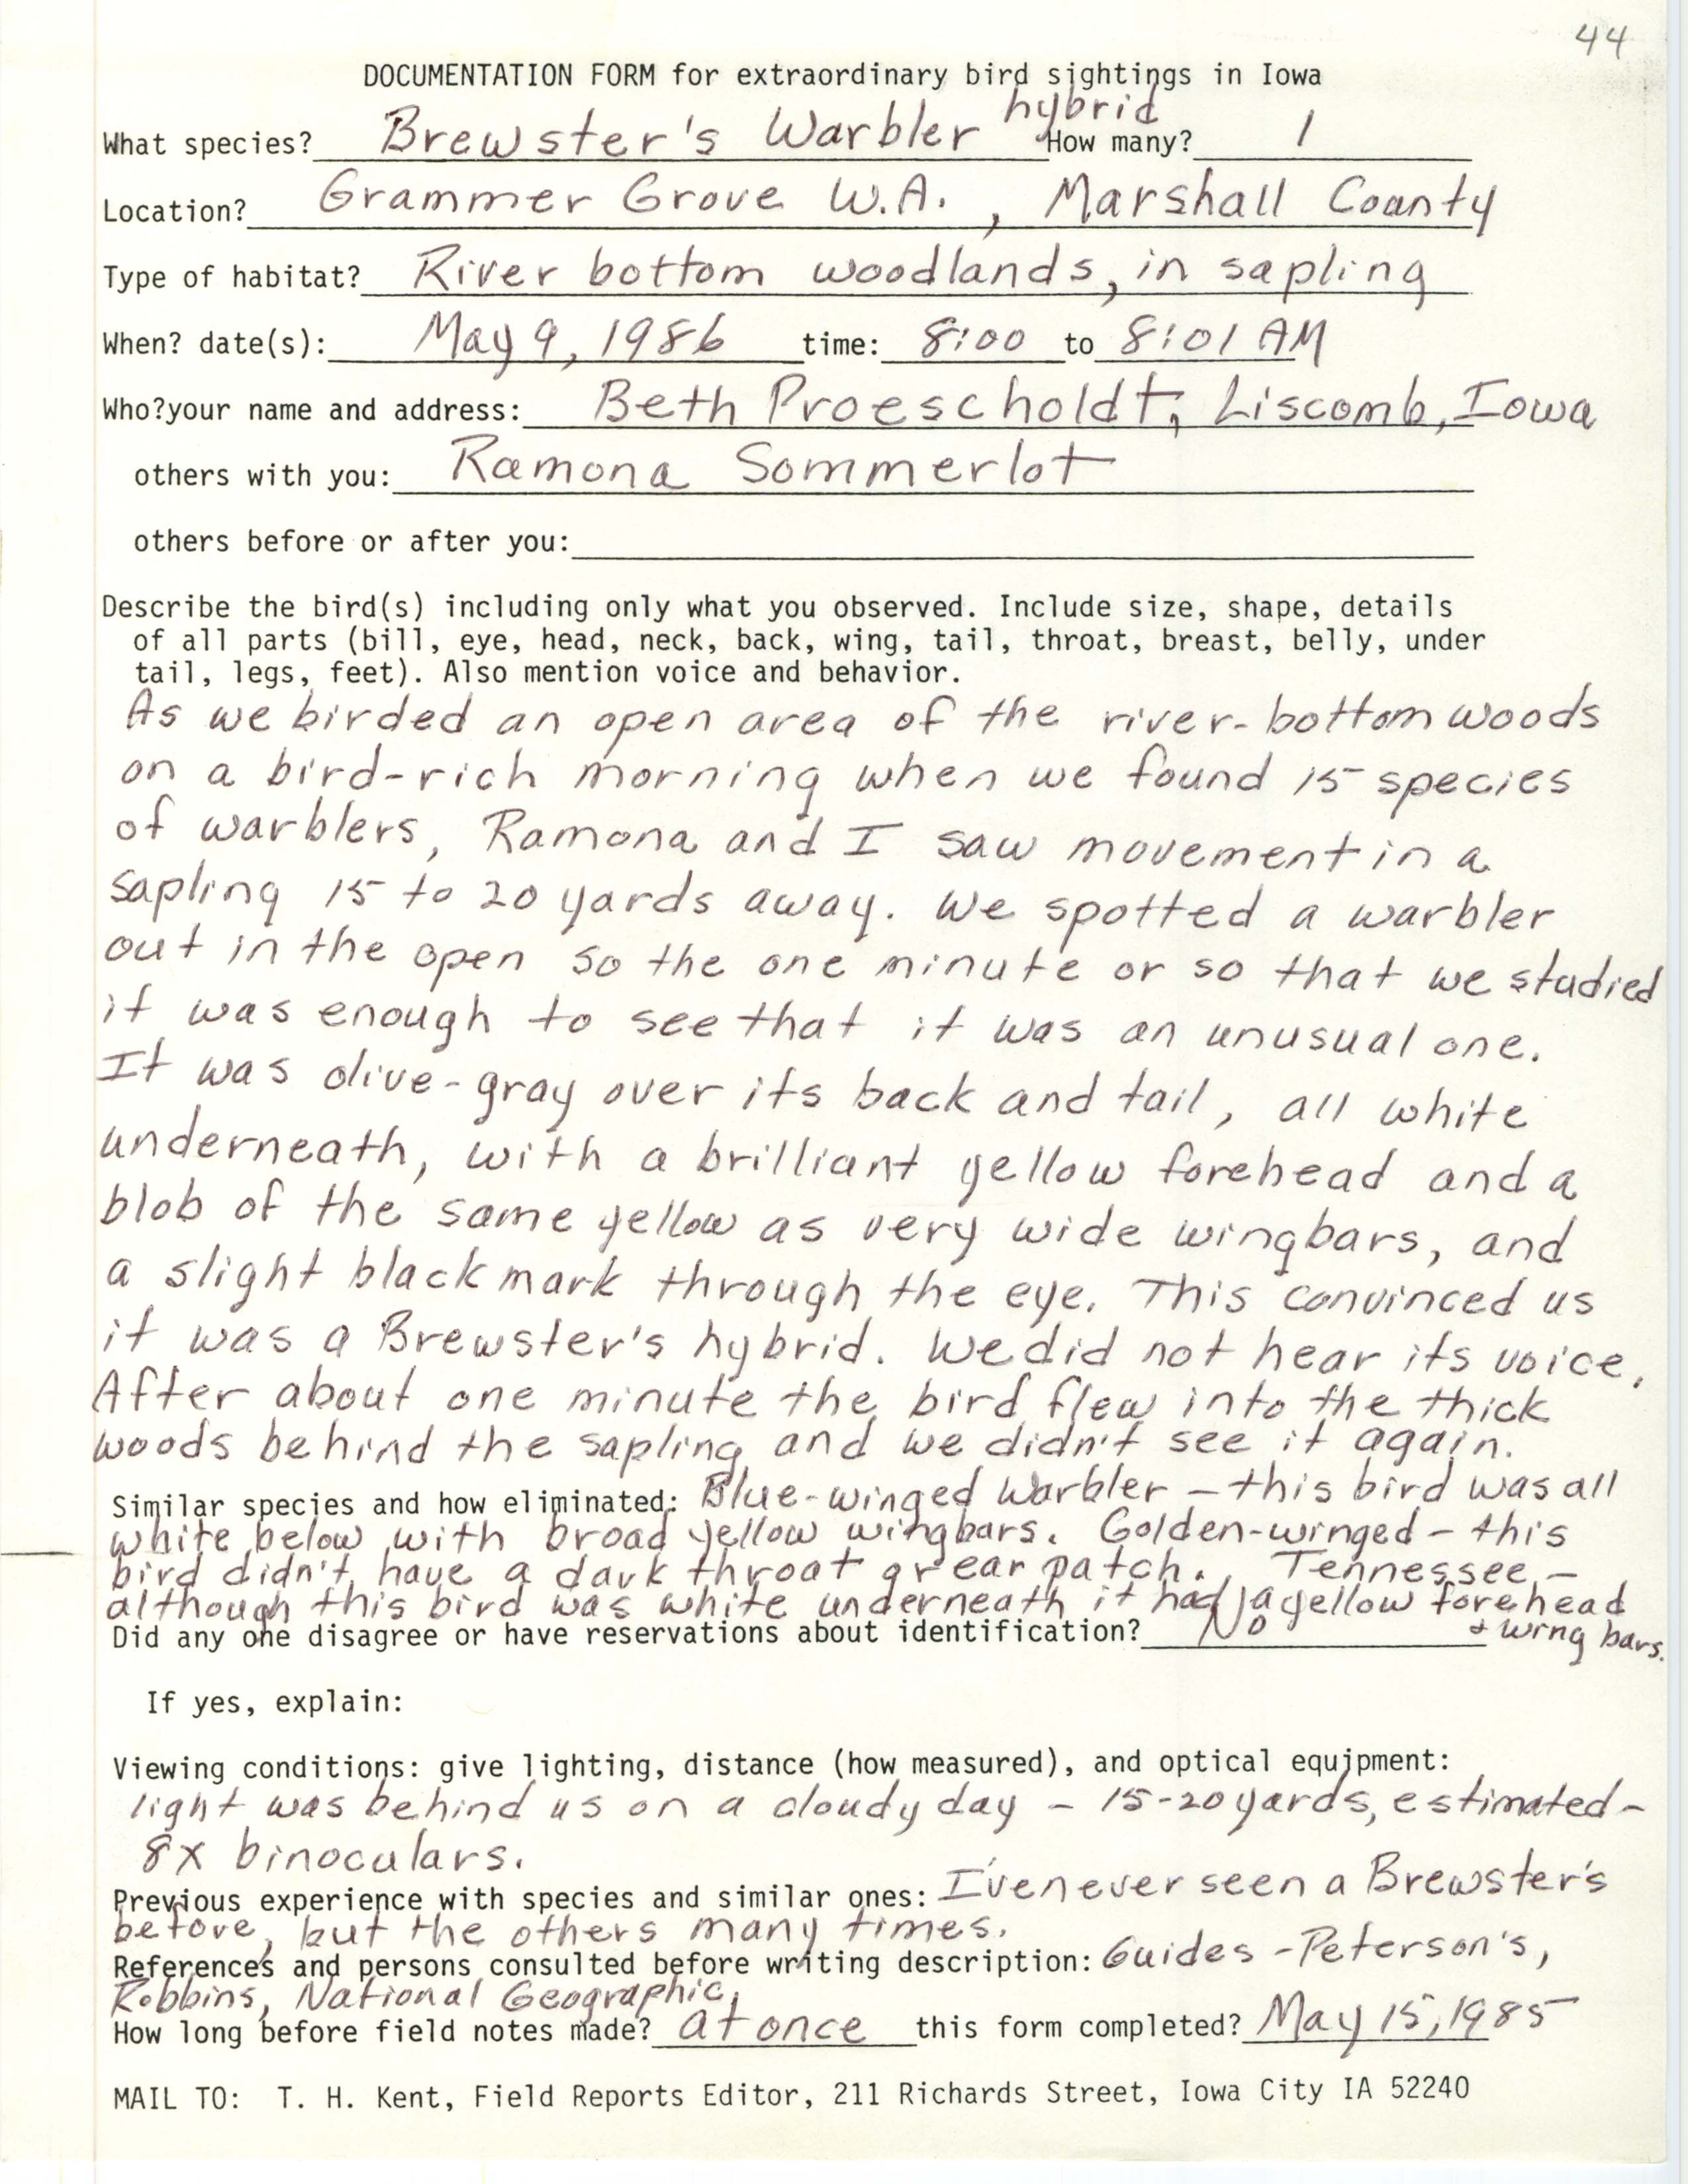 Rare bird documentation form for Brewster's Warbler at Grammer Grove Wildlife Area, 1986